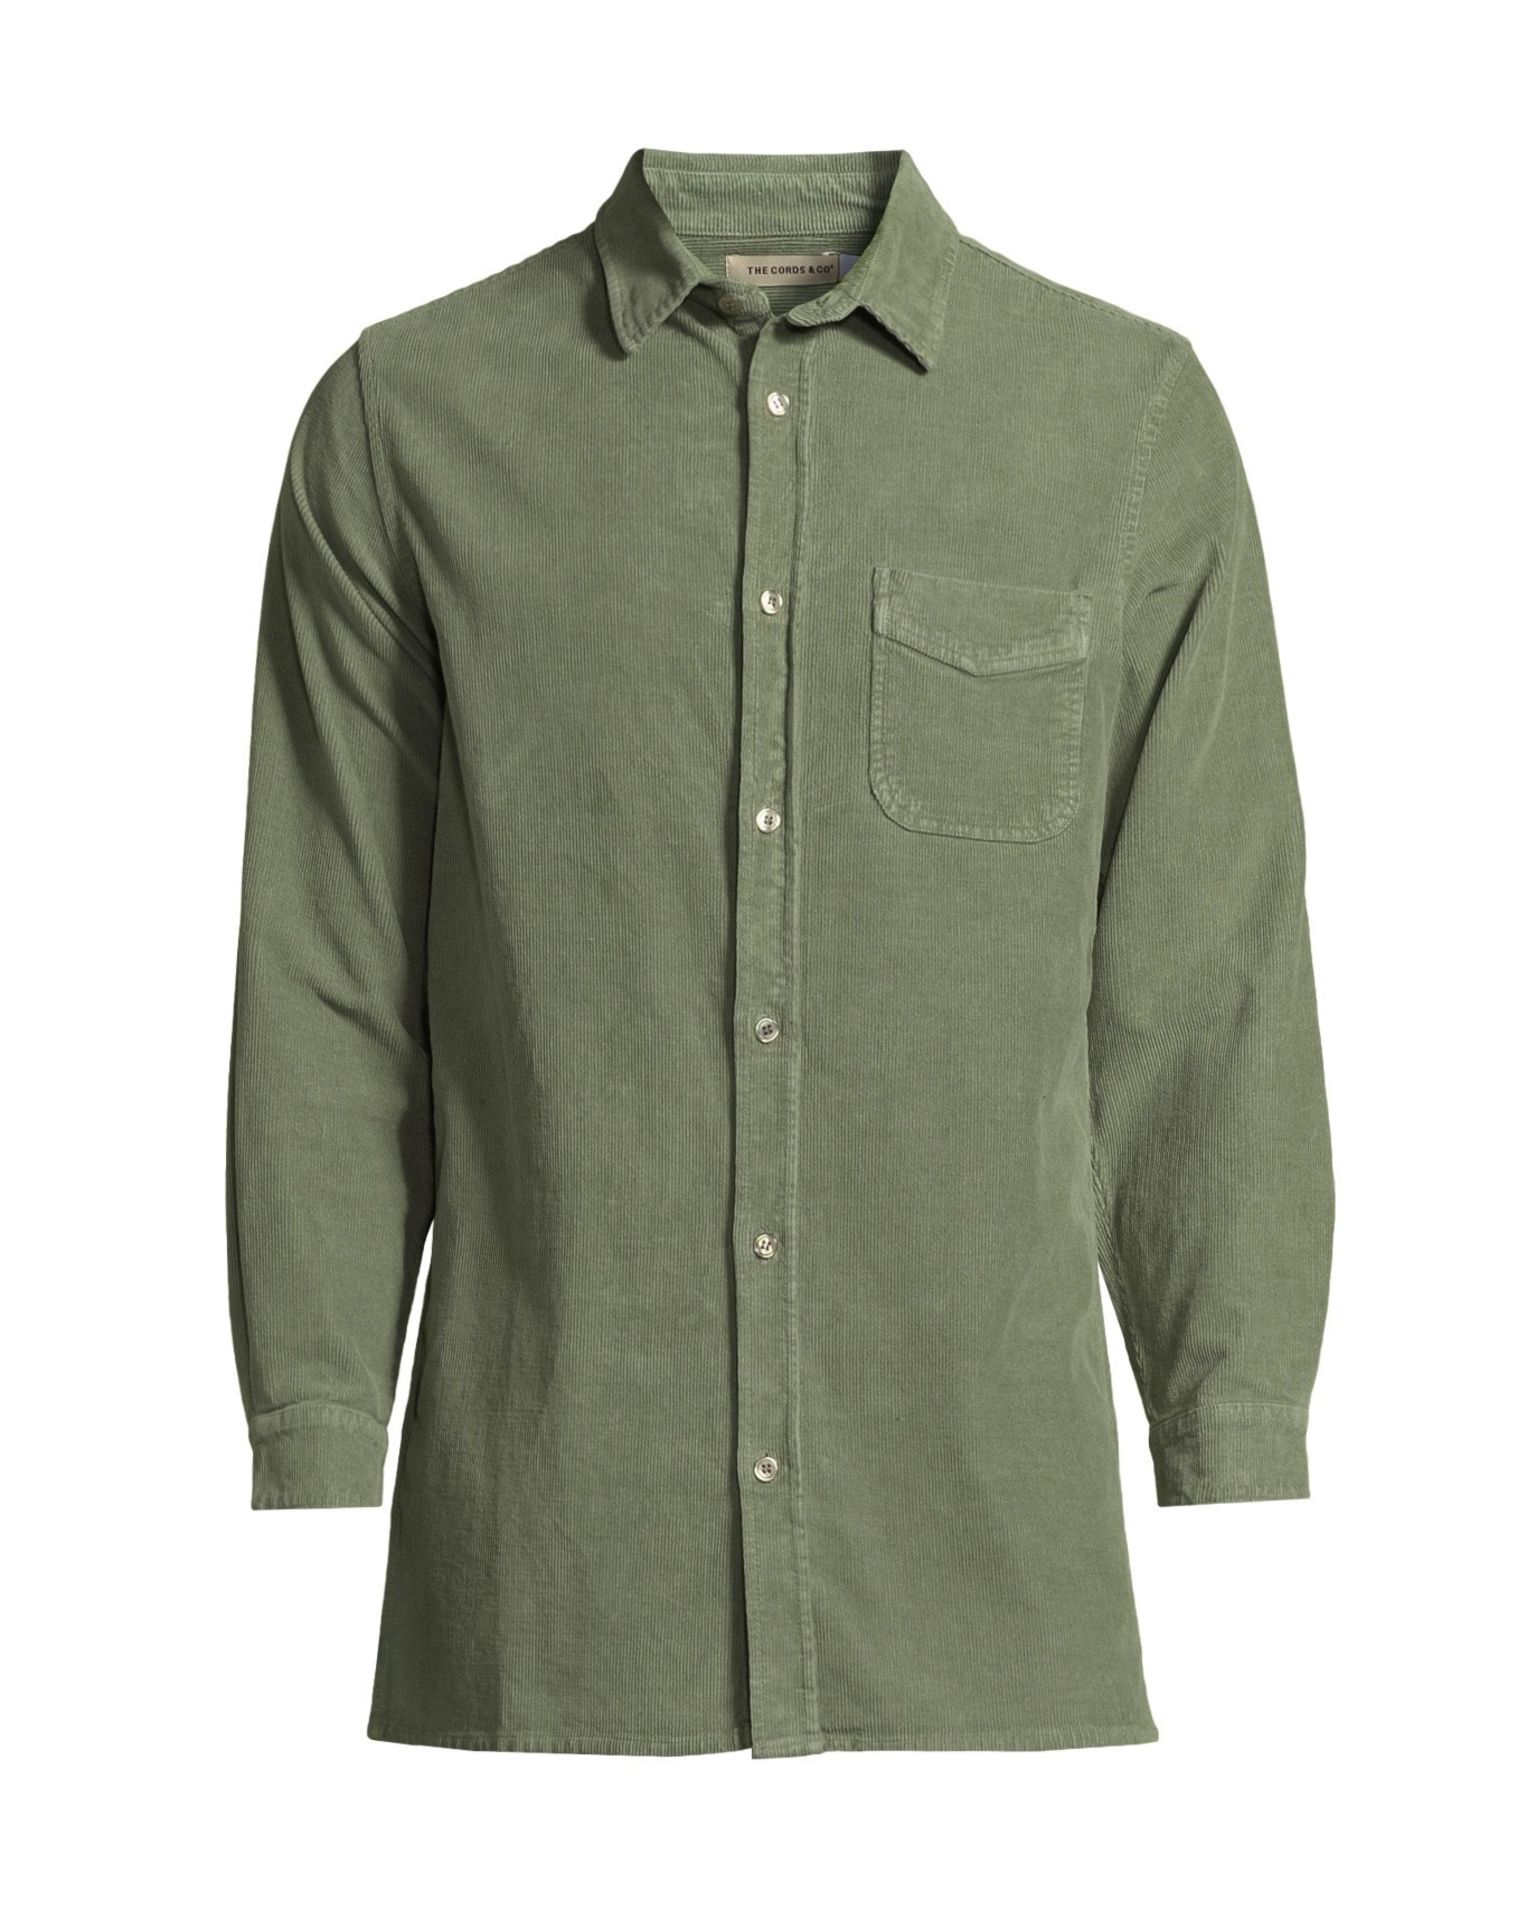 The Cords & Co. "Ossp" Style, Uni-Sex Collard Long Sleeve Shirt Iconic Green,Black